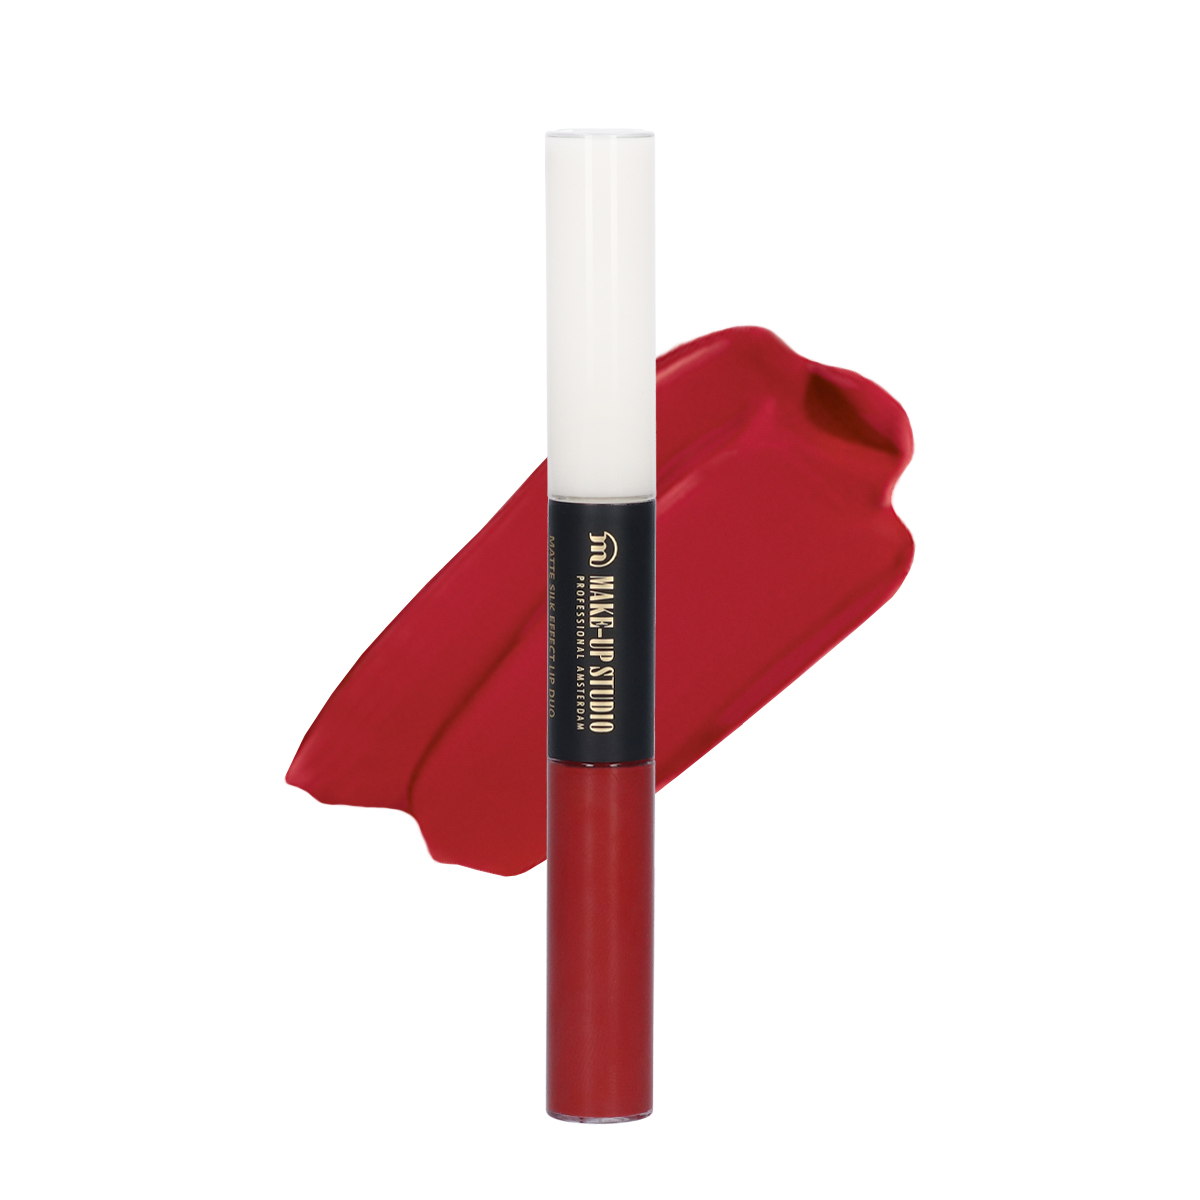 Matte Silk Effect Lip Duo Lipstick - Sincerely Red - Make-up Studio